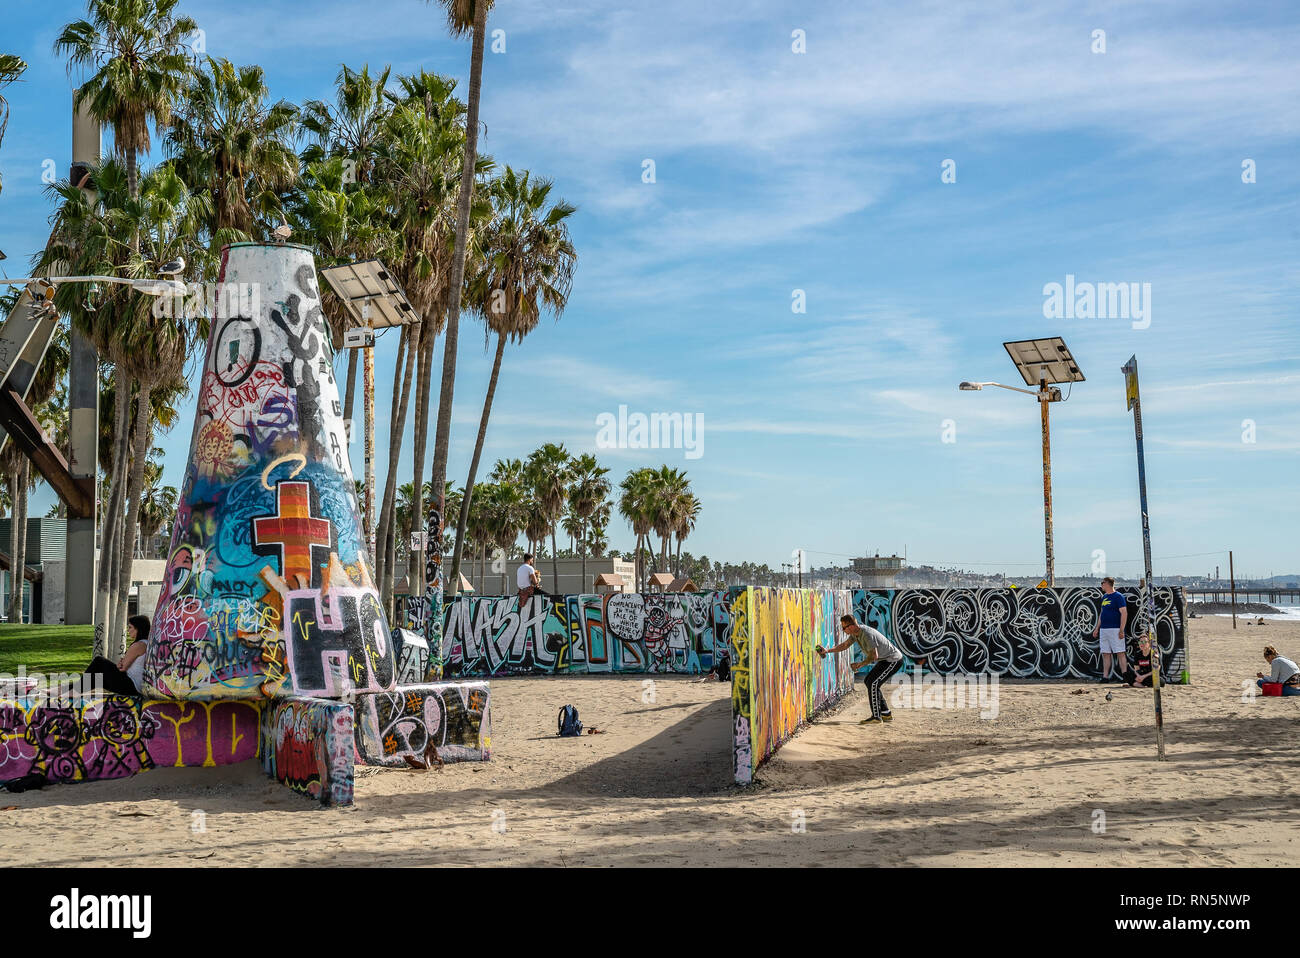 Wall of graffiti at Venice Beach Los Angeles California USA Palm Trees in the back Stock Photo